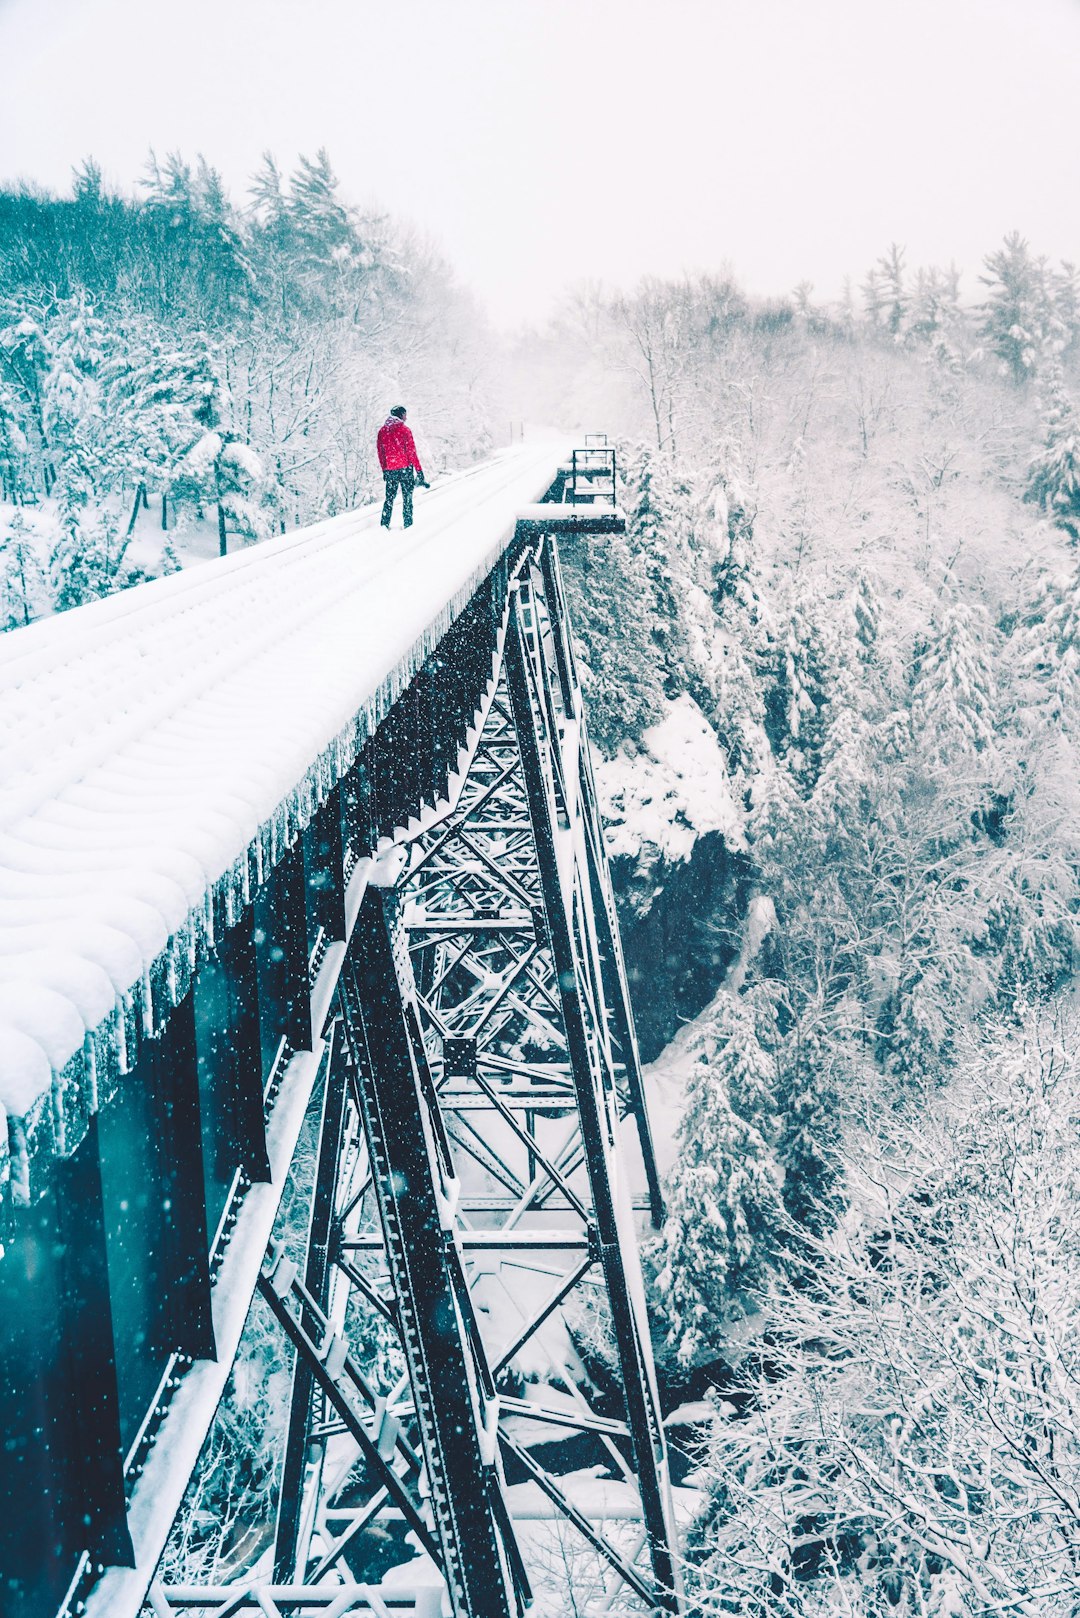 man wearing red jacket walking on the snowy bridge